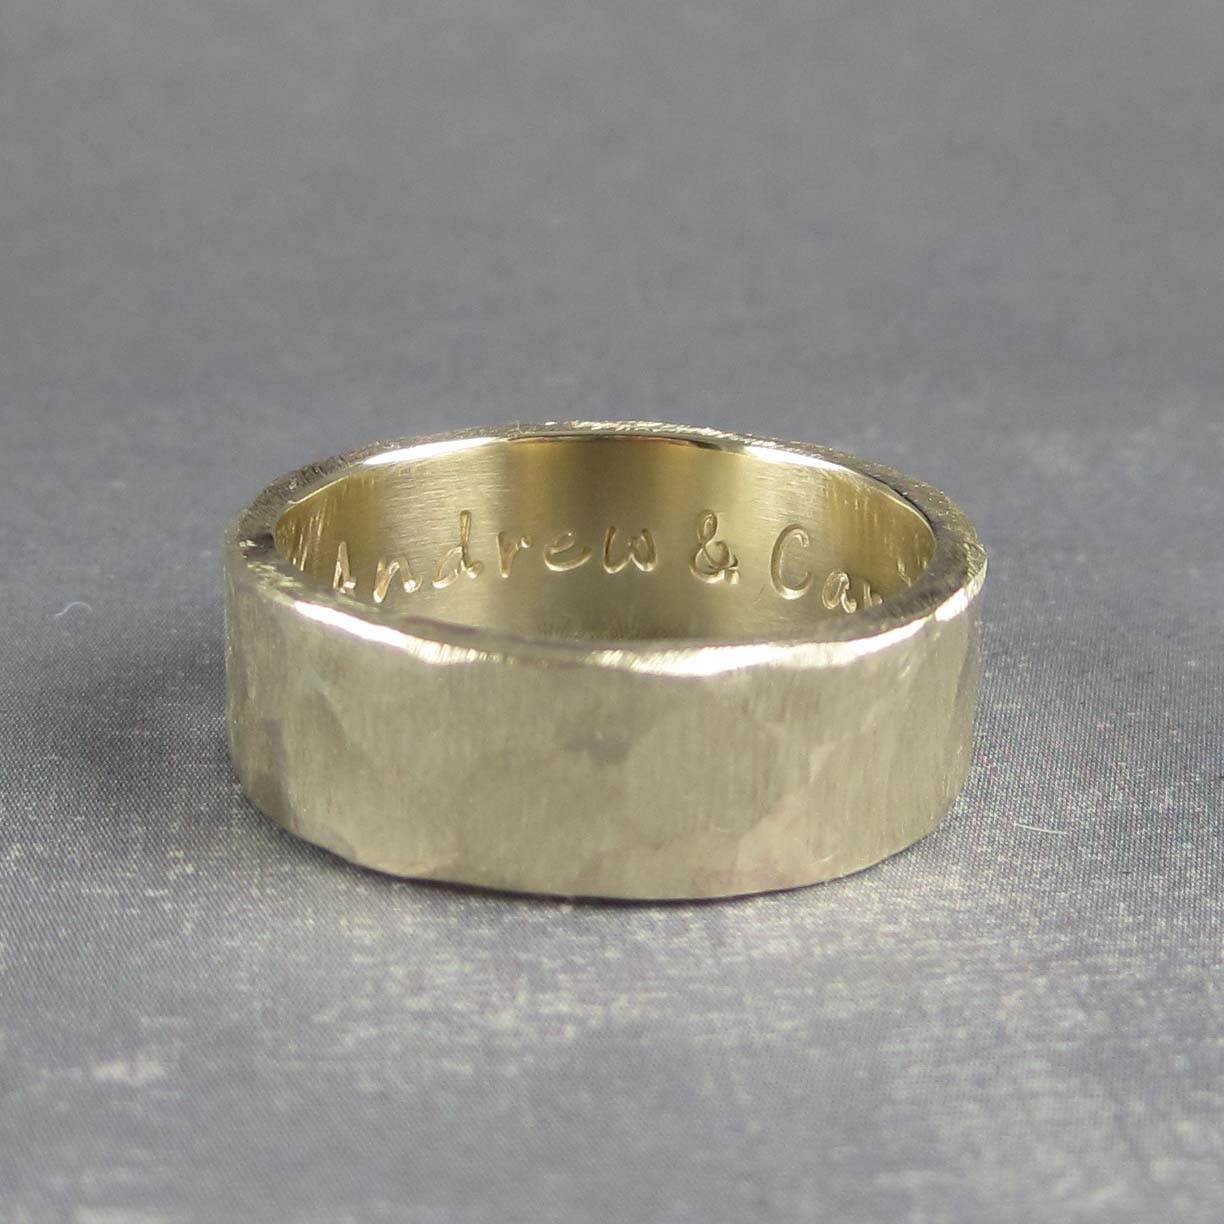 Mens gold wedding ring